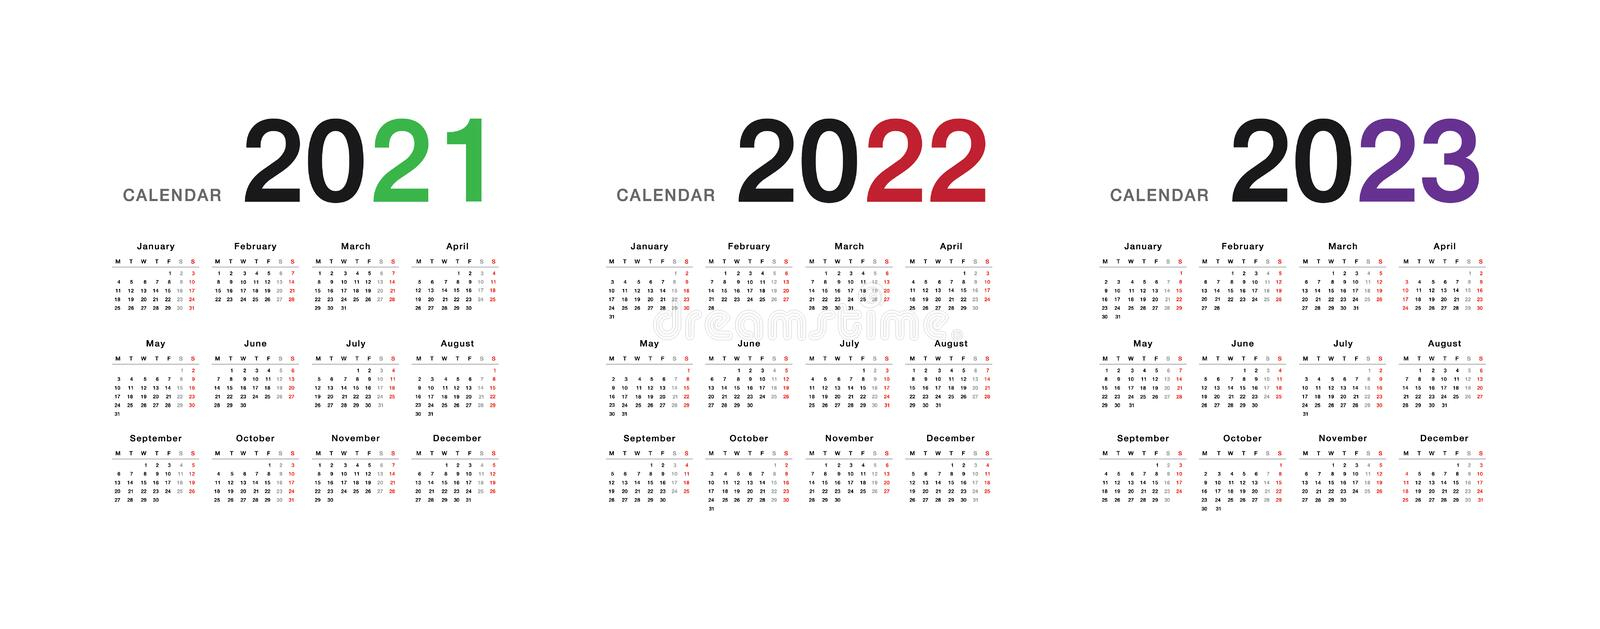 Smu 2022-2023 Calendar - August Calendar 2022